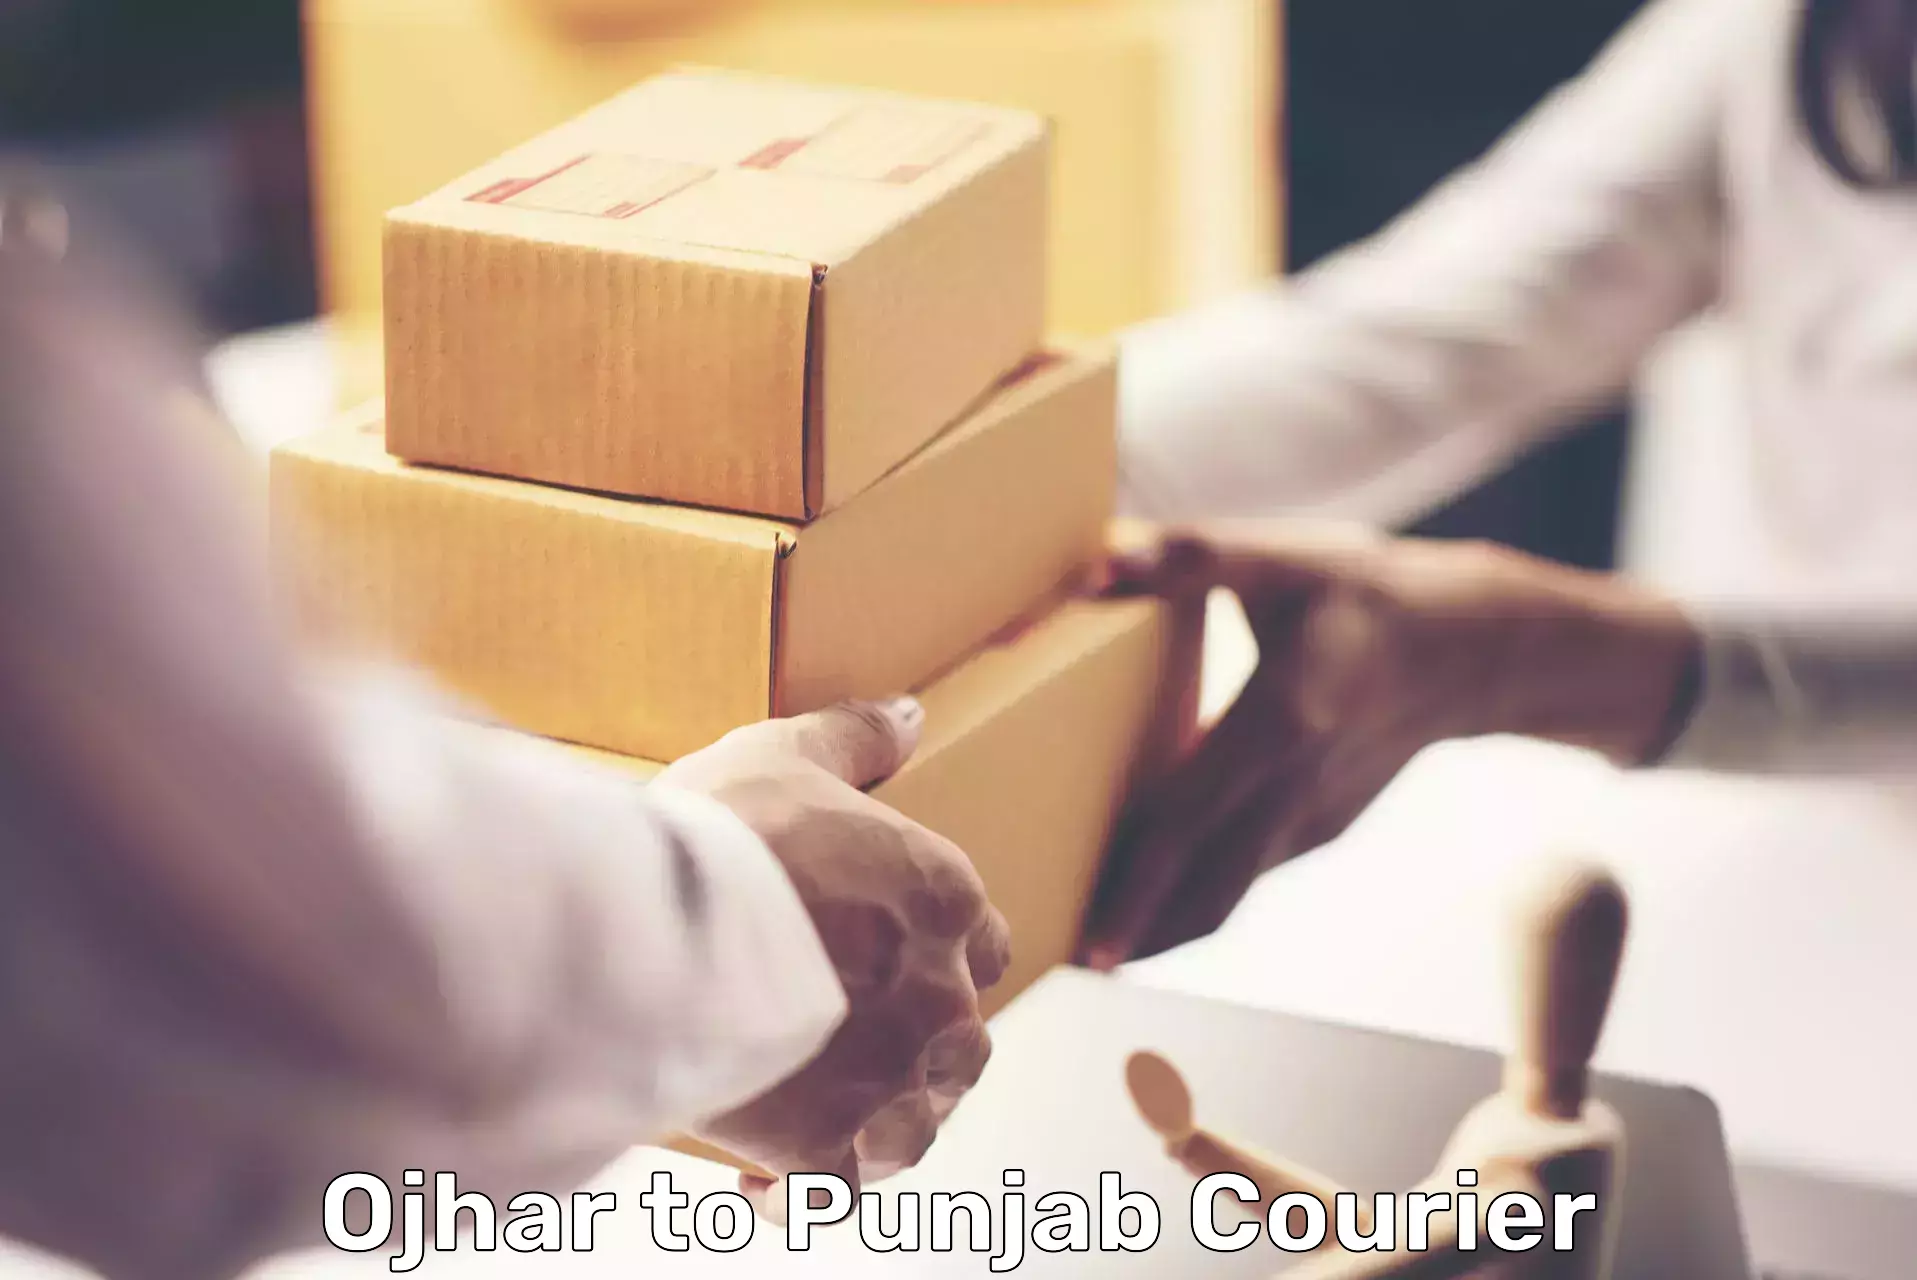 Courier service comparison Ojhar to Nangal